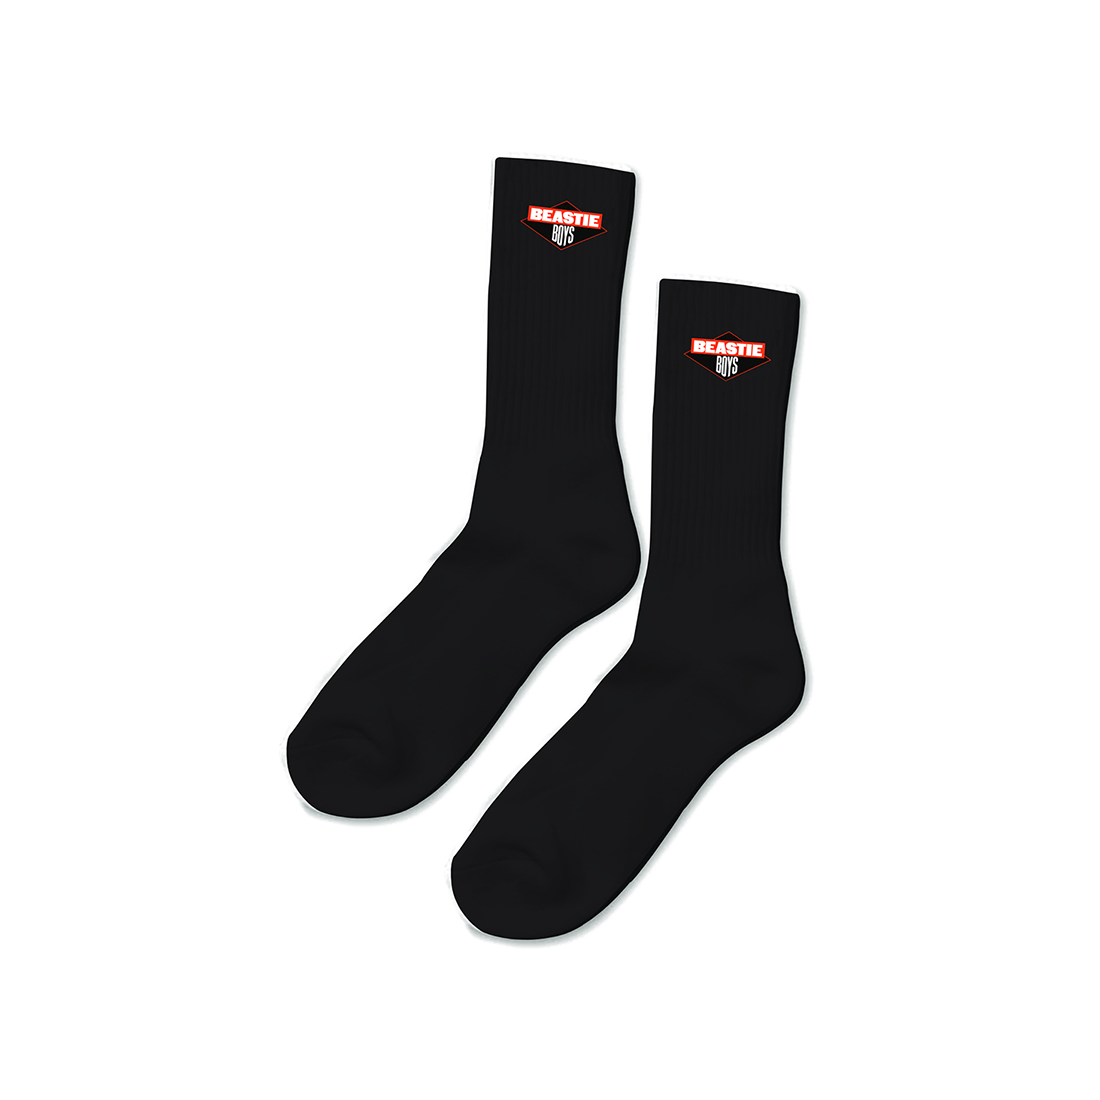 Beastie Boys - Embroidered BB Shield socks